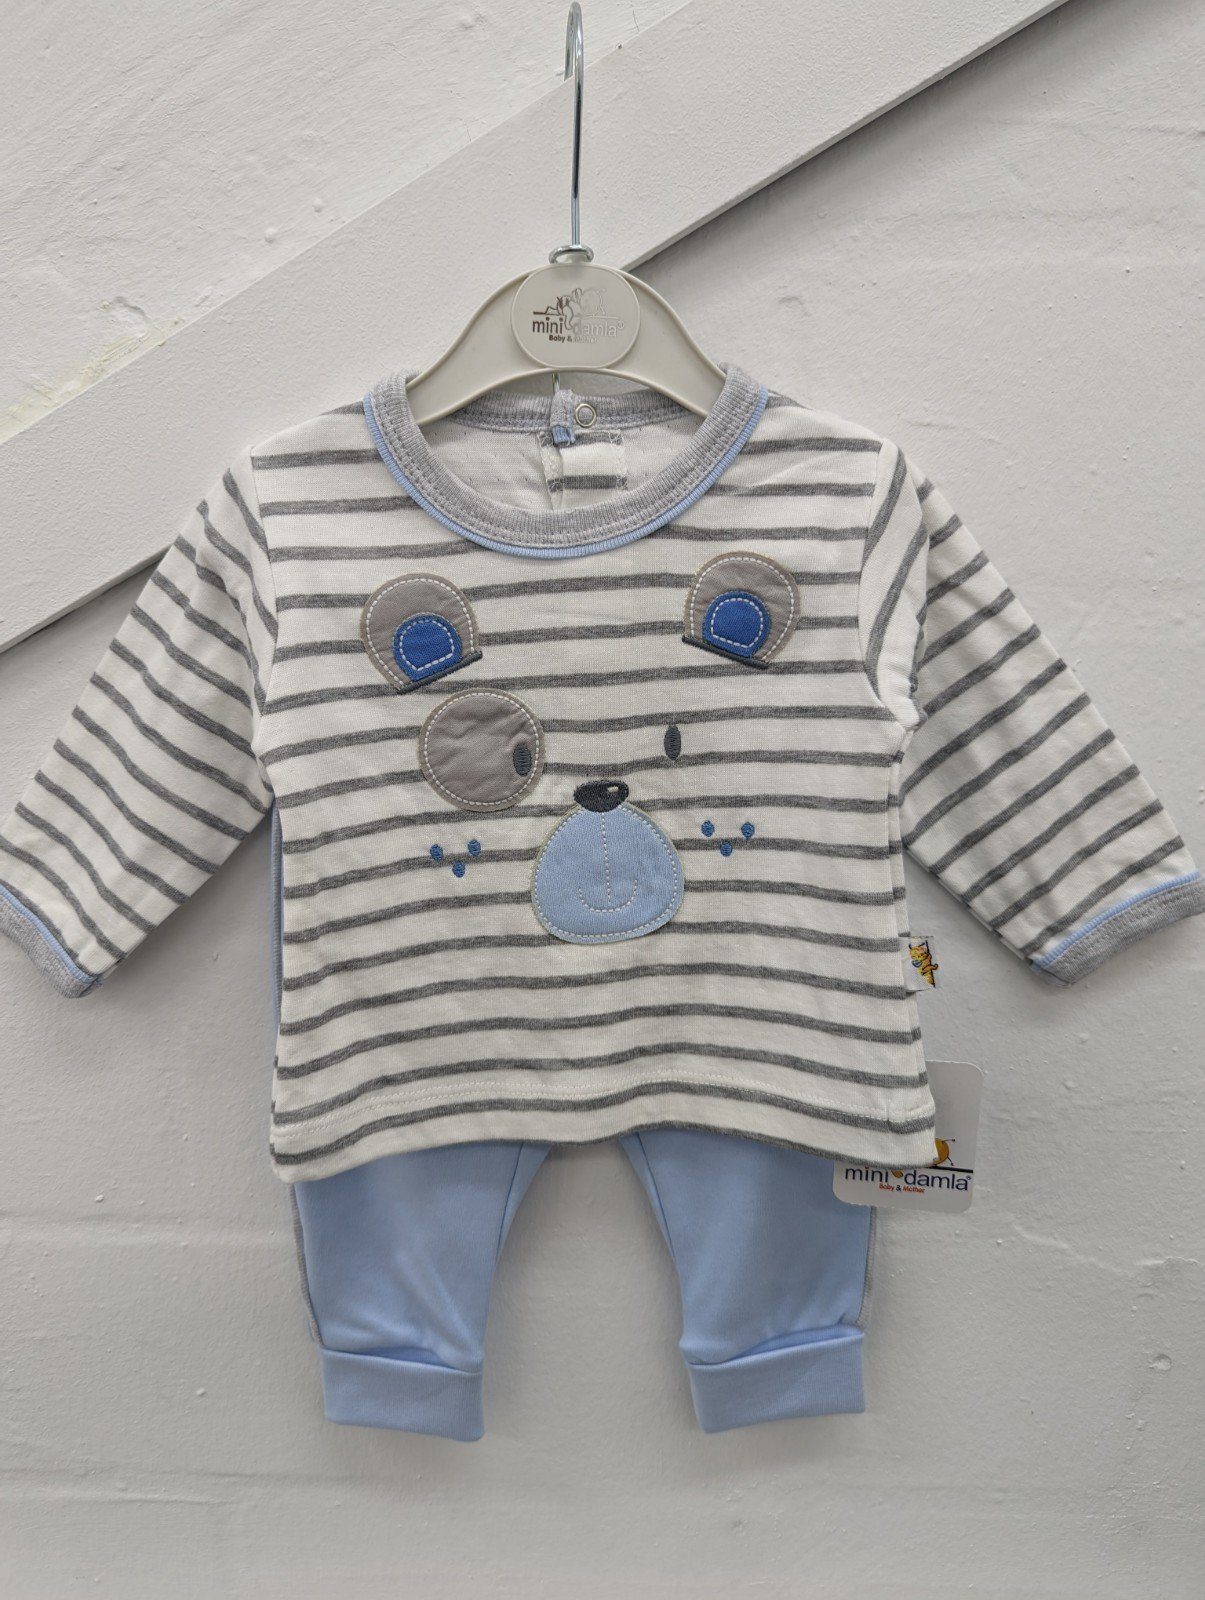 mini damla Set babyblau Anzug 2-teilig Baby